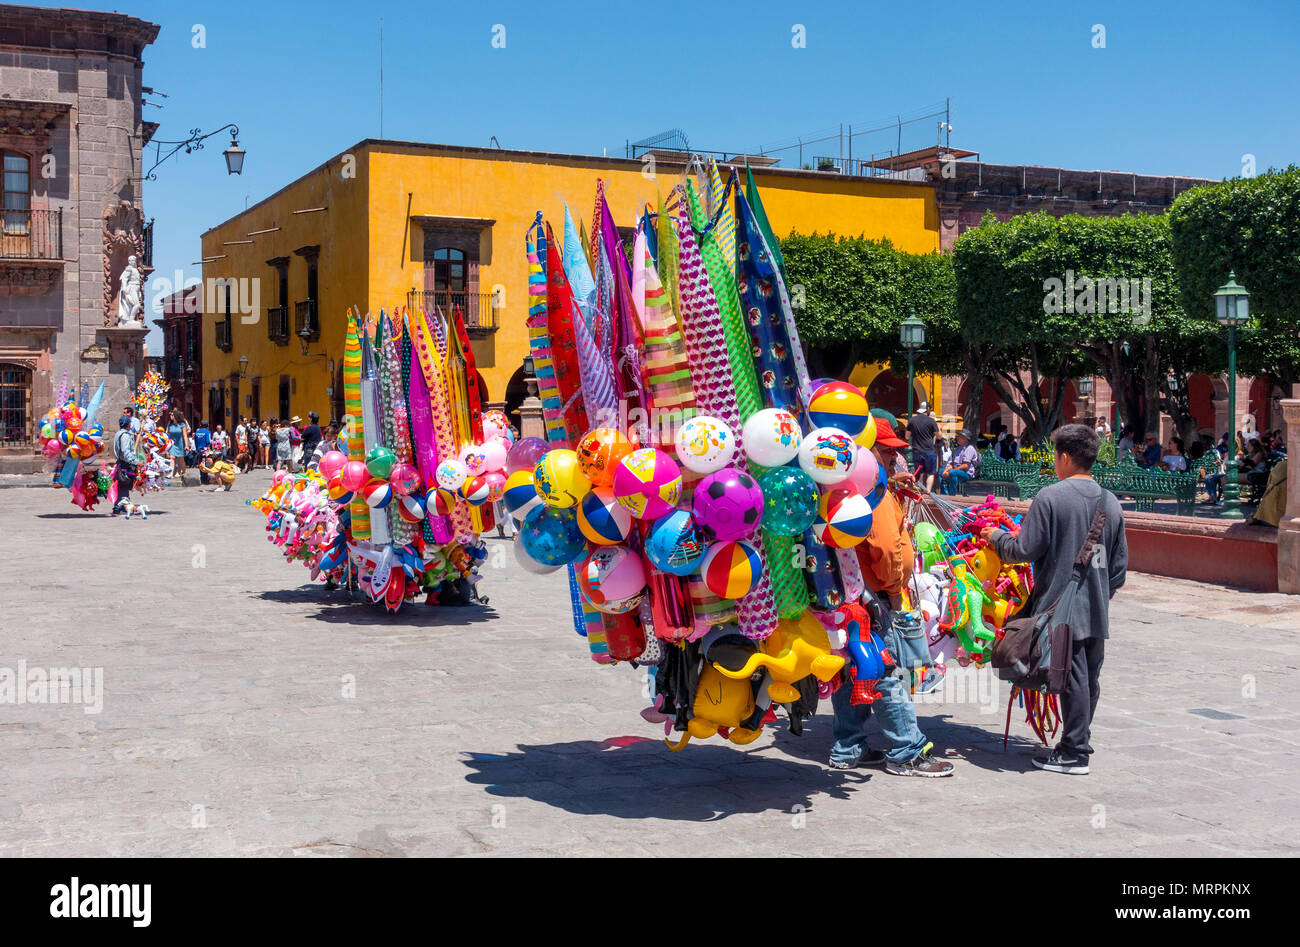 Plastic toy venders at La Jadin in city center, San Miguel de Allende, Mexico Stock Photo